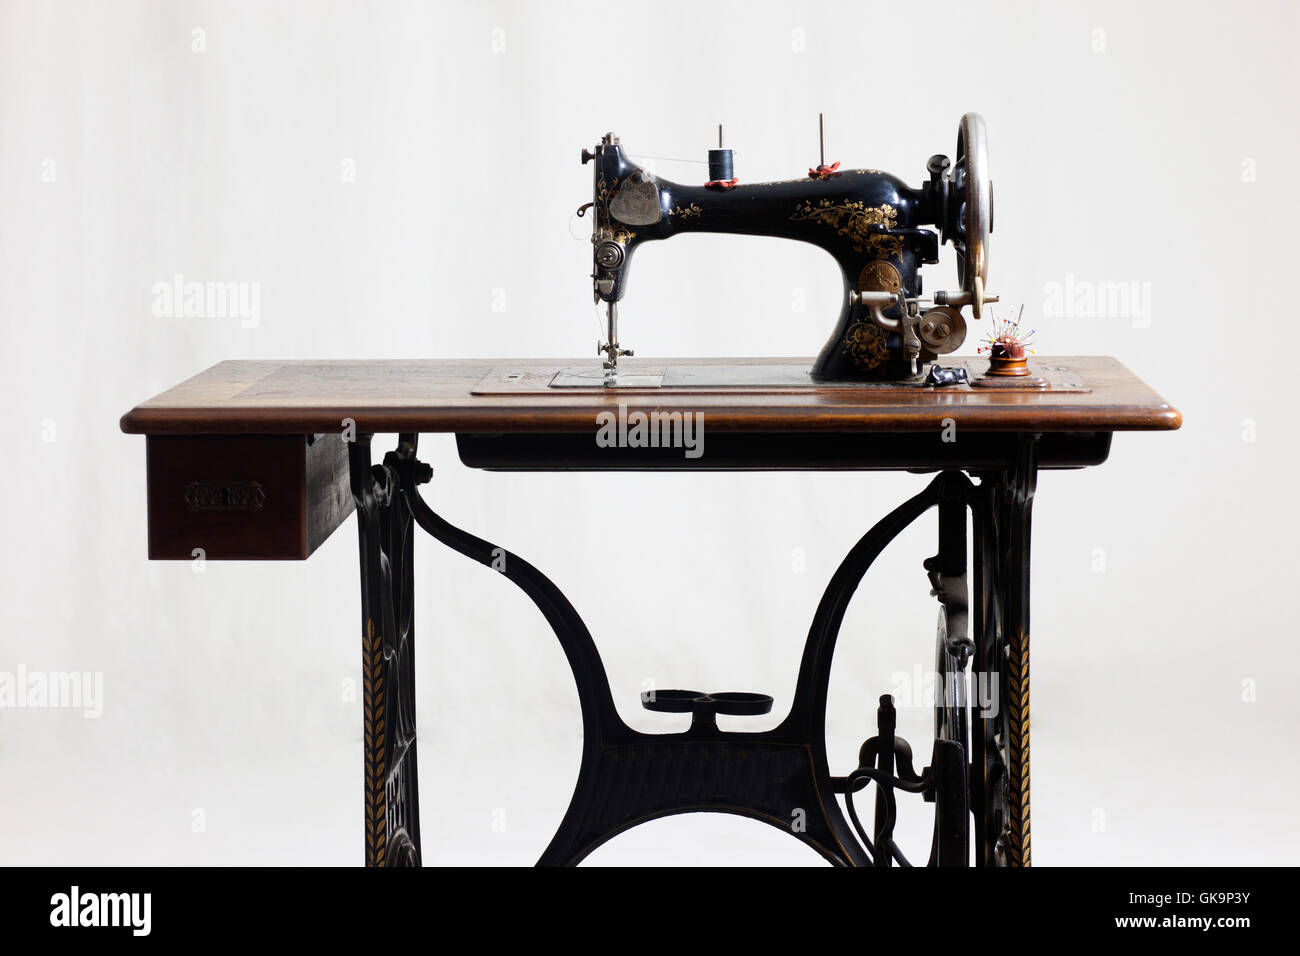 tool sew sewing-machine Stock Photo